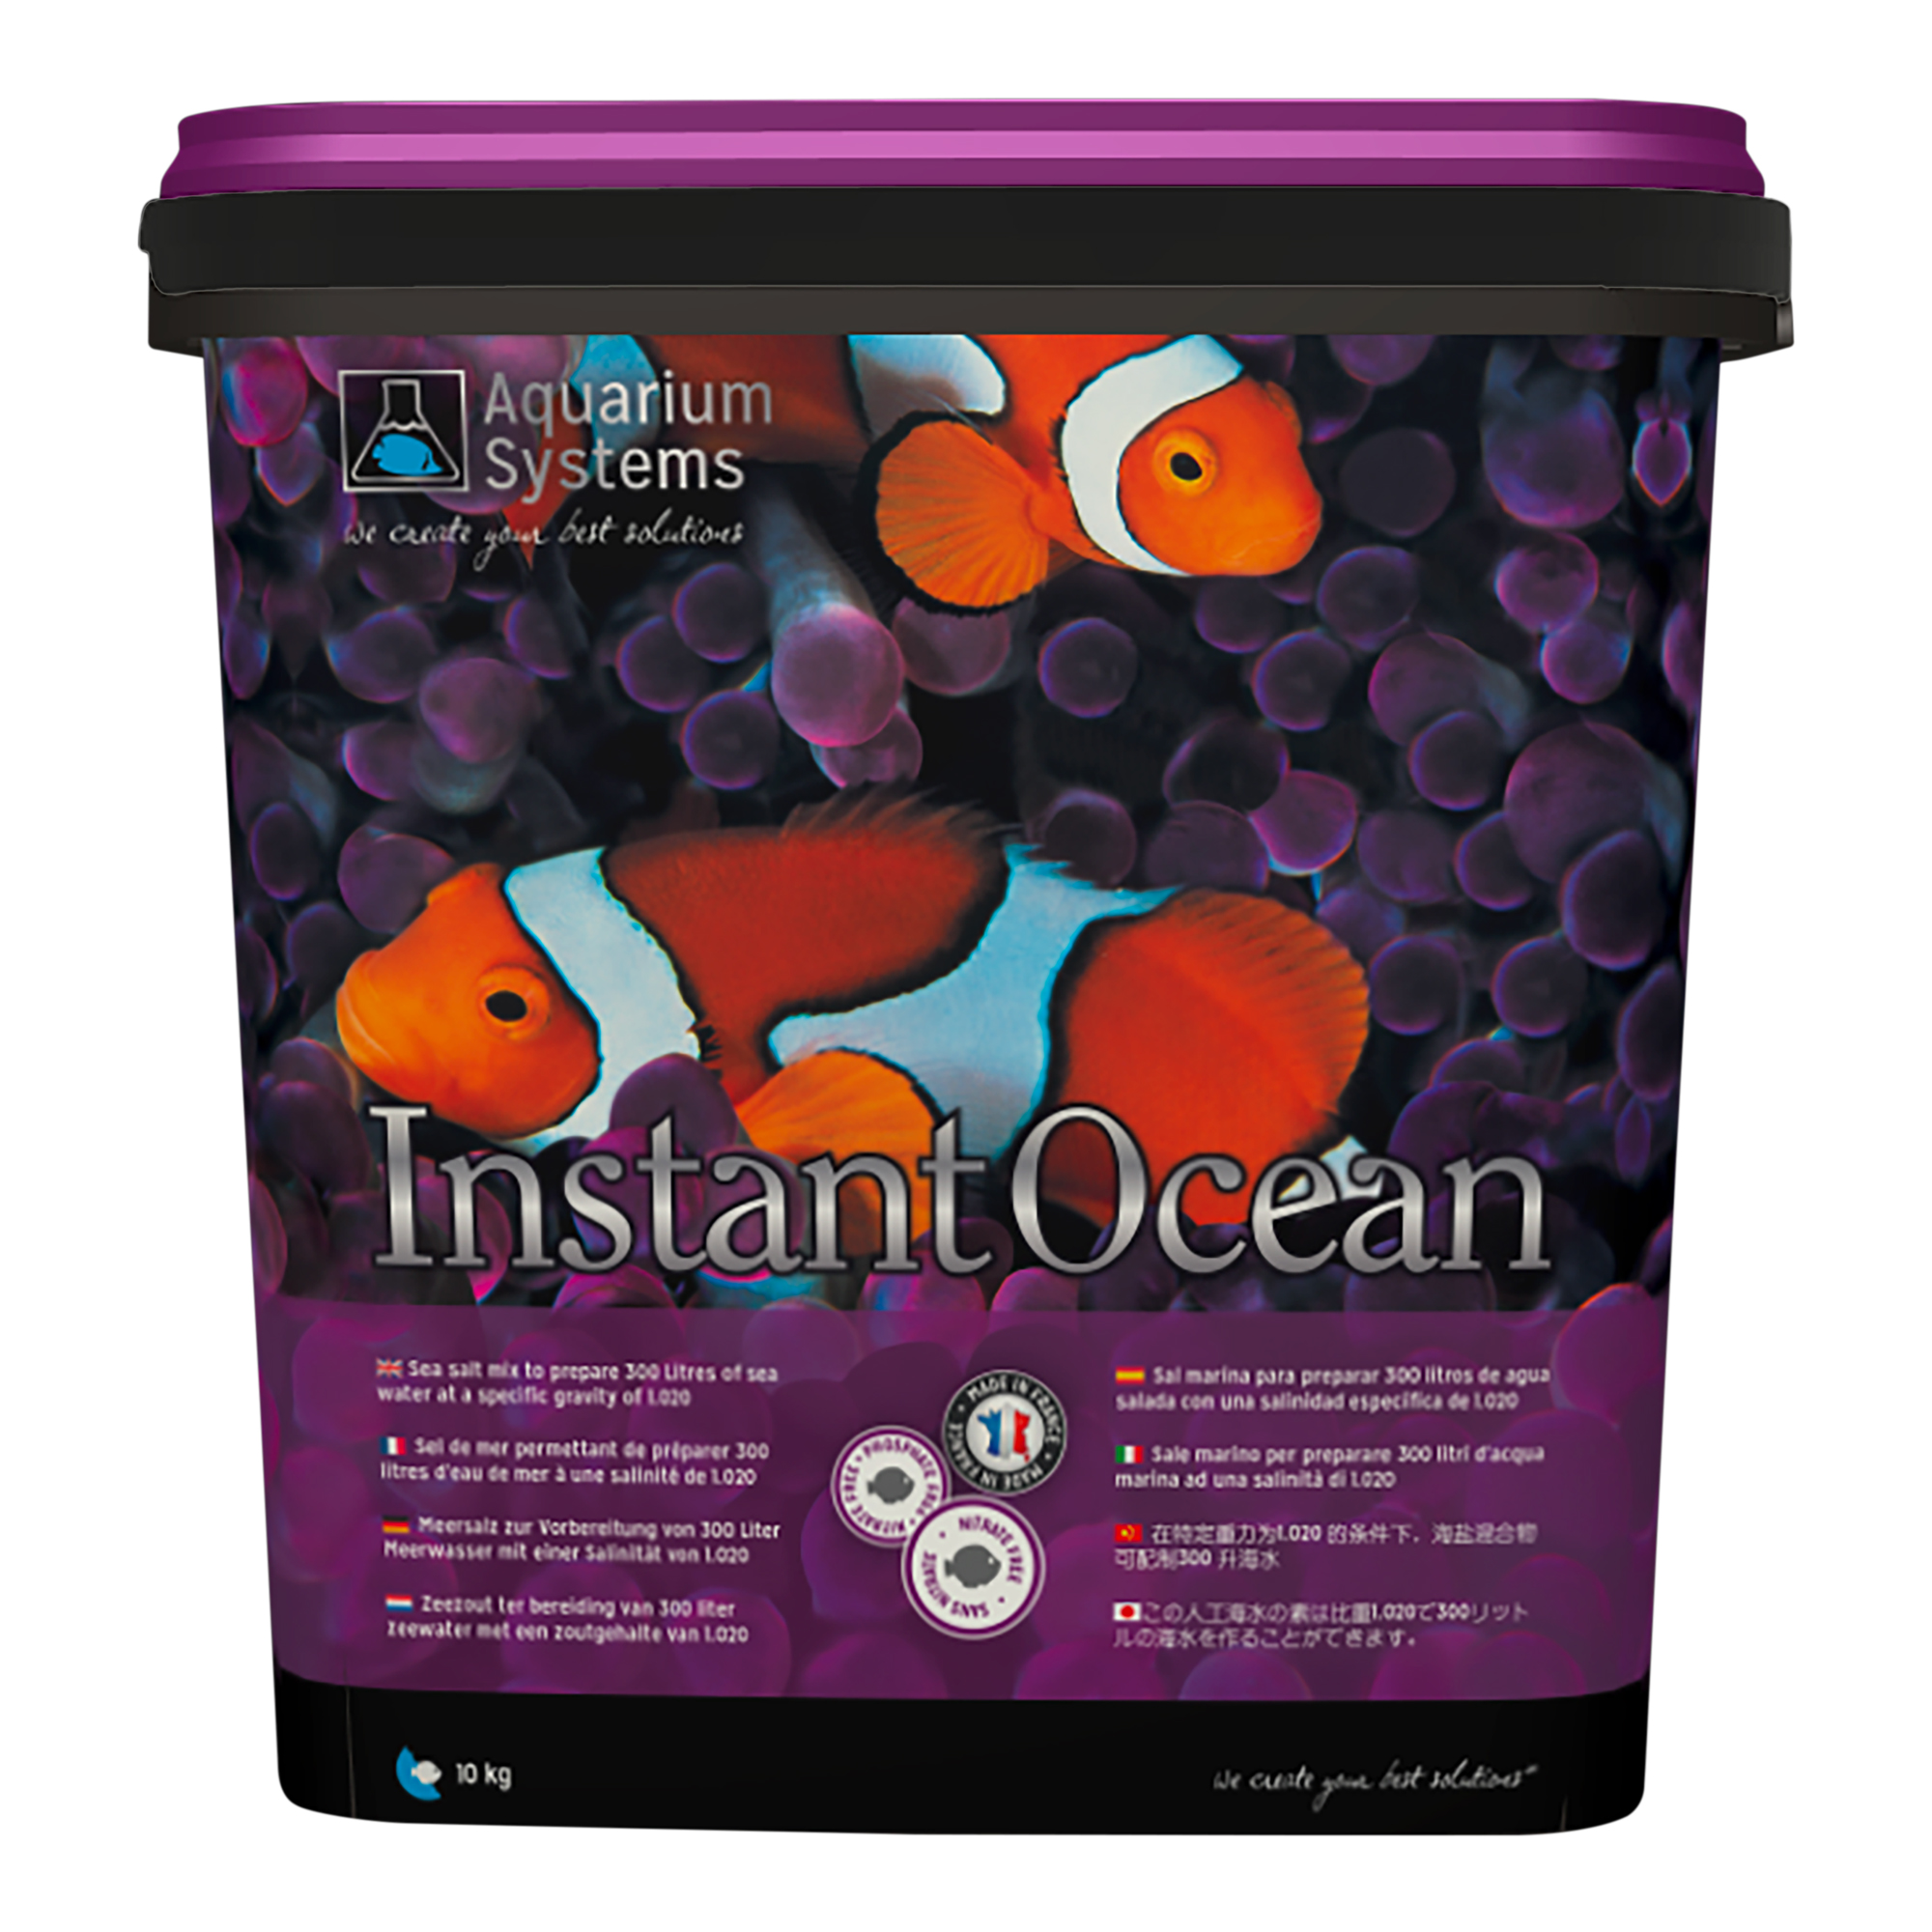 Aquarium Systems Instant Ocean Meersalz, 10 kg Eimer/ 300 L - im Eimer